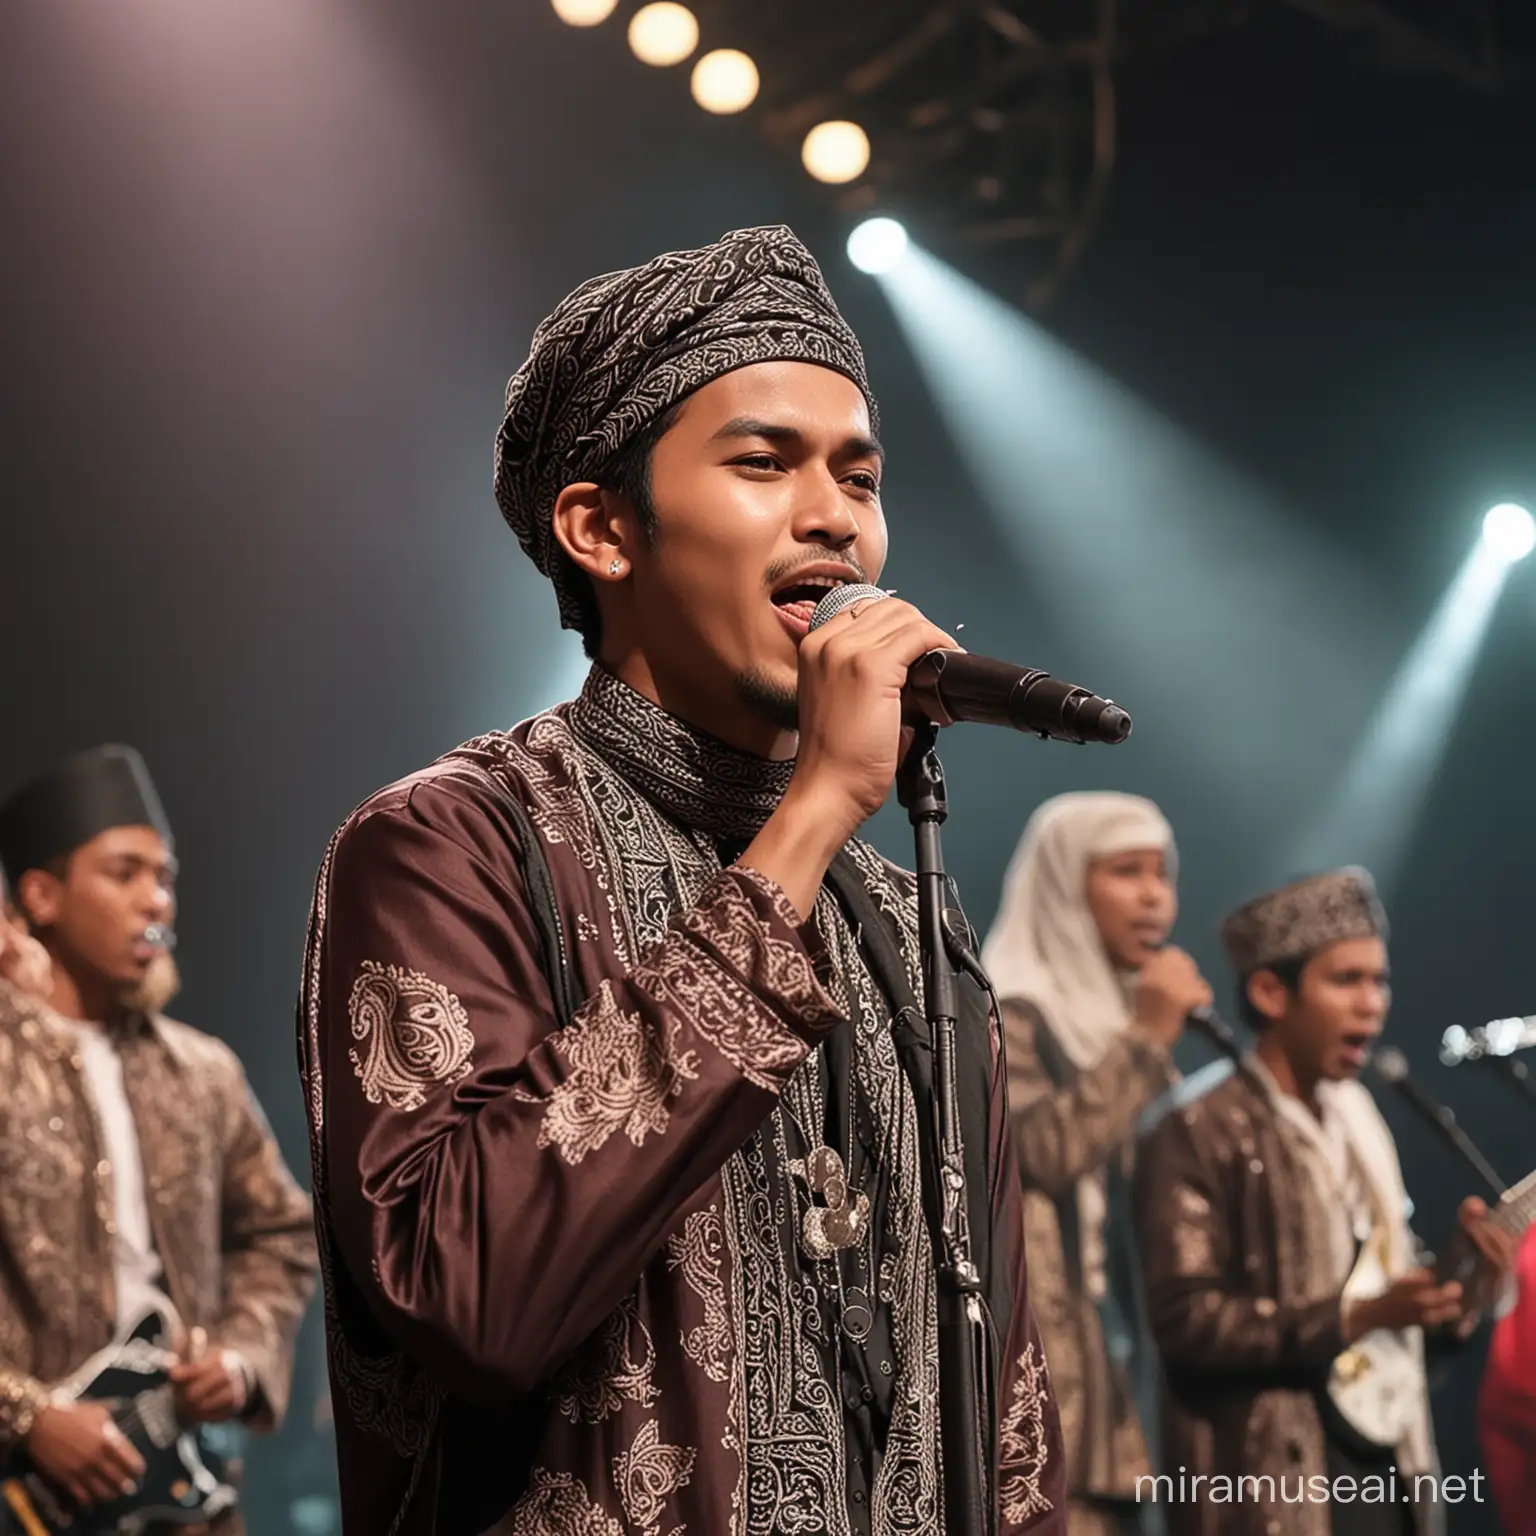 Seorang penyanyi laki laki muda..wajah indonesia, bandan besar, memakai baju muslim mewah,
Bernyanyi di atas panggung mewah,
Baiground panggung musik lengkap musisi nya